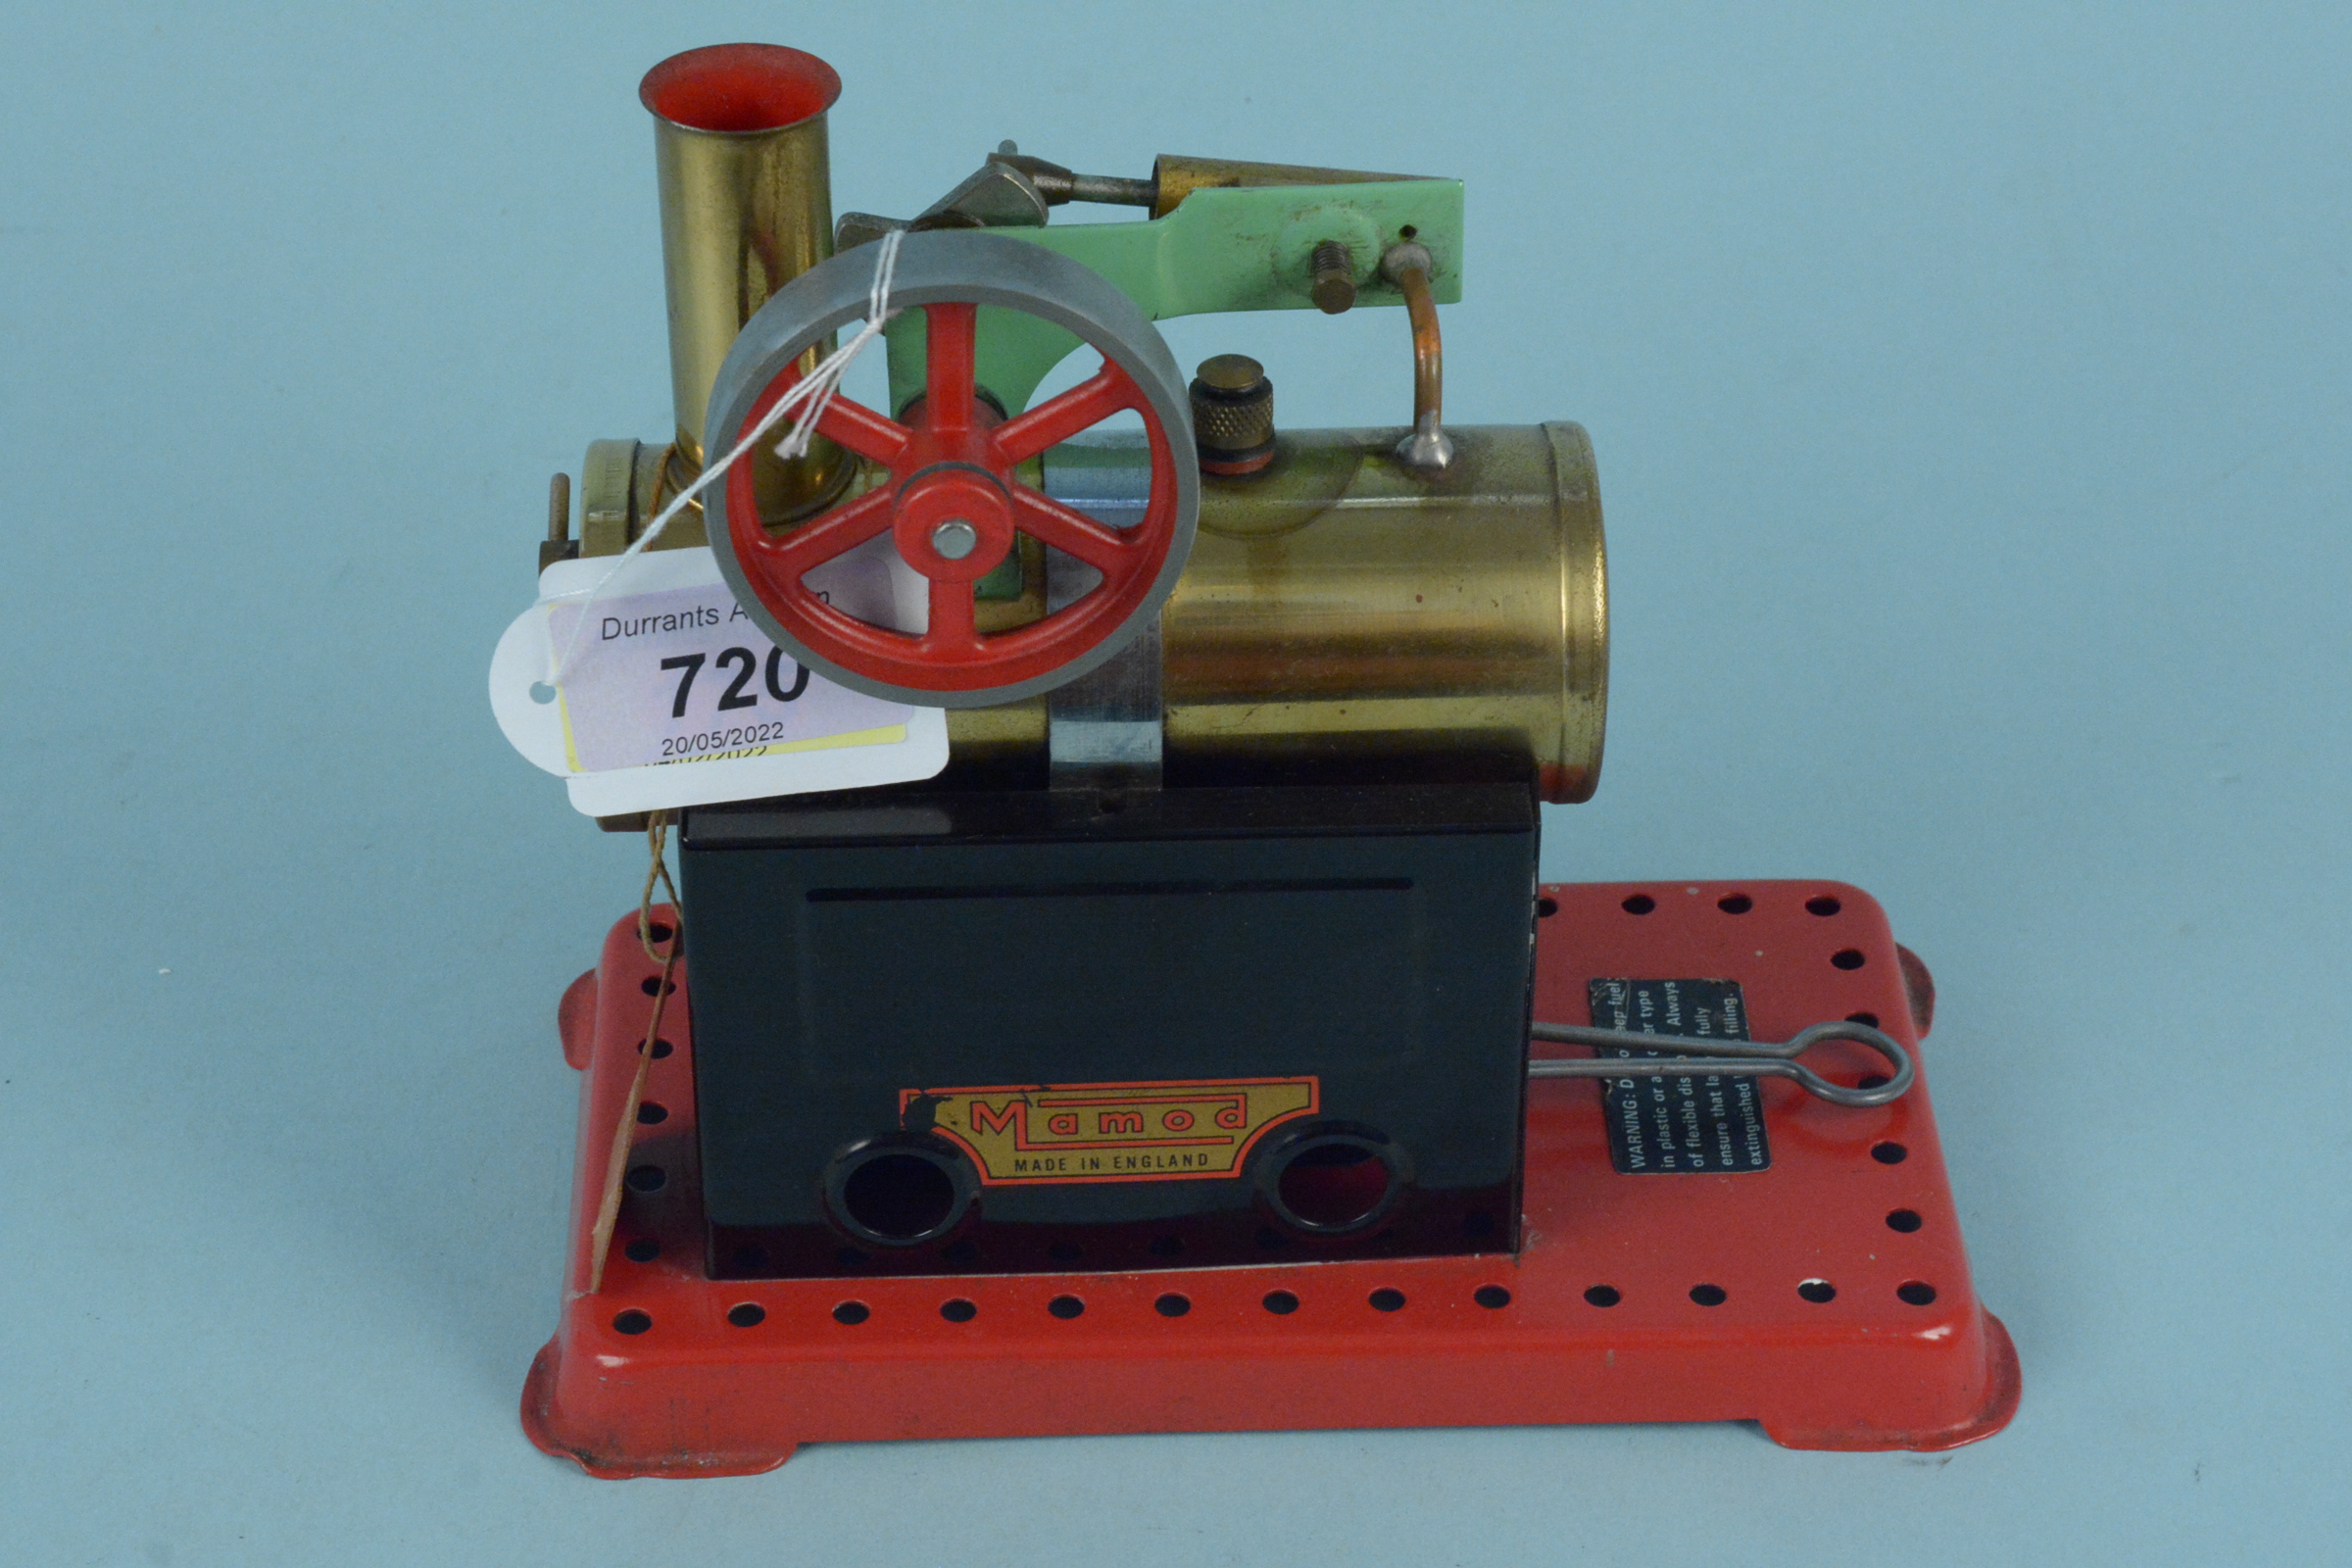 A Mamod SP2 steam engine with burner,